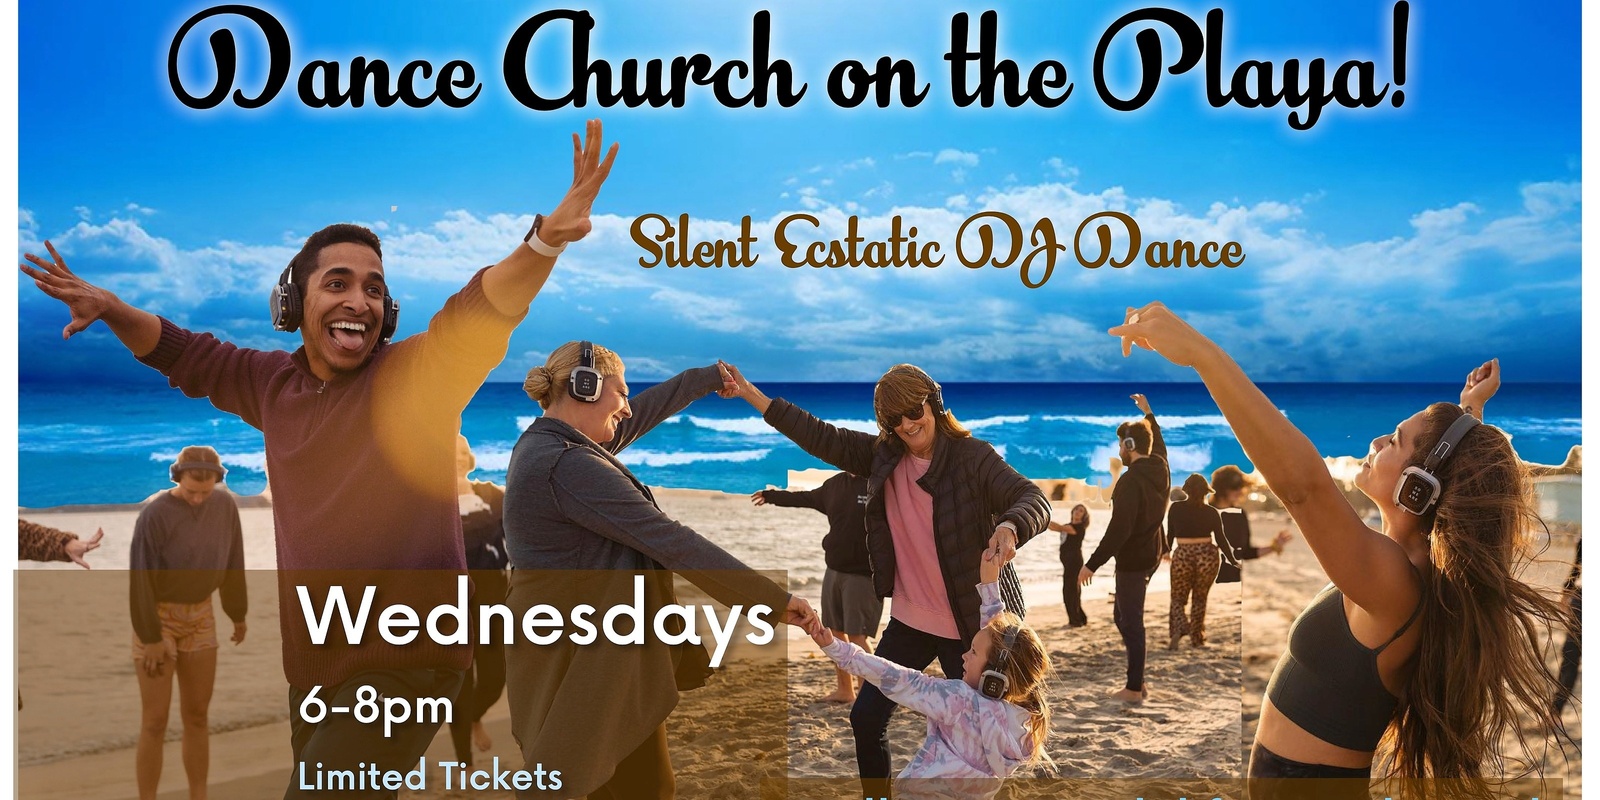 Banner image for Wednesday San Pancho Dance Church on the Playa!